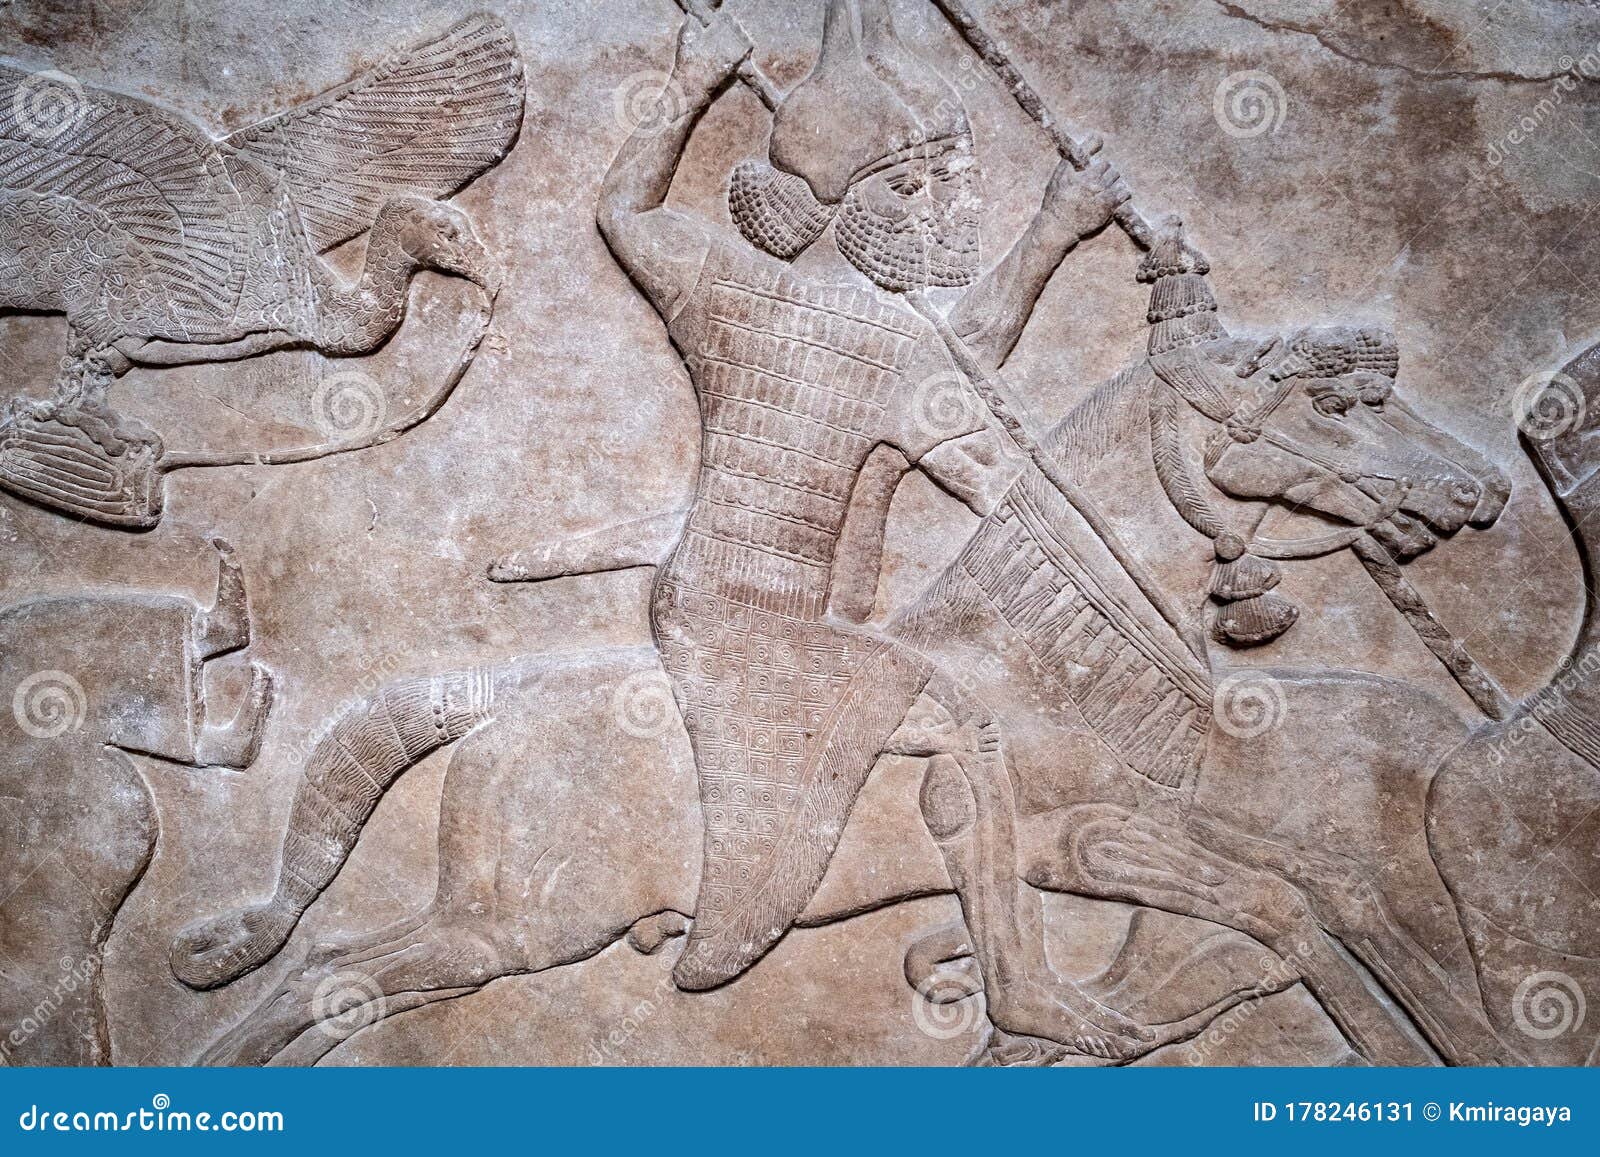 ancient persian bas-relief depicting warriors on horseback